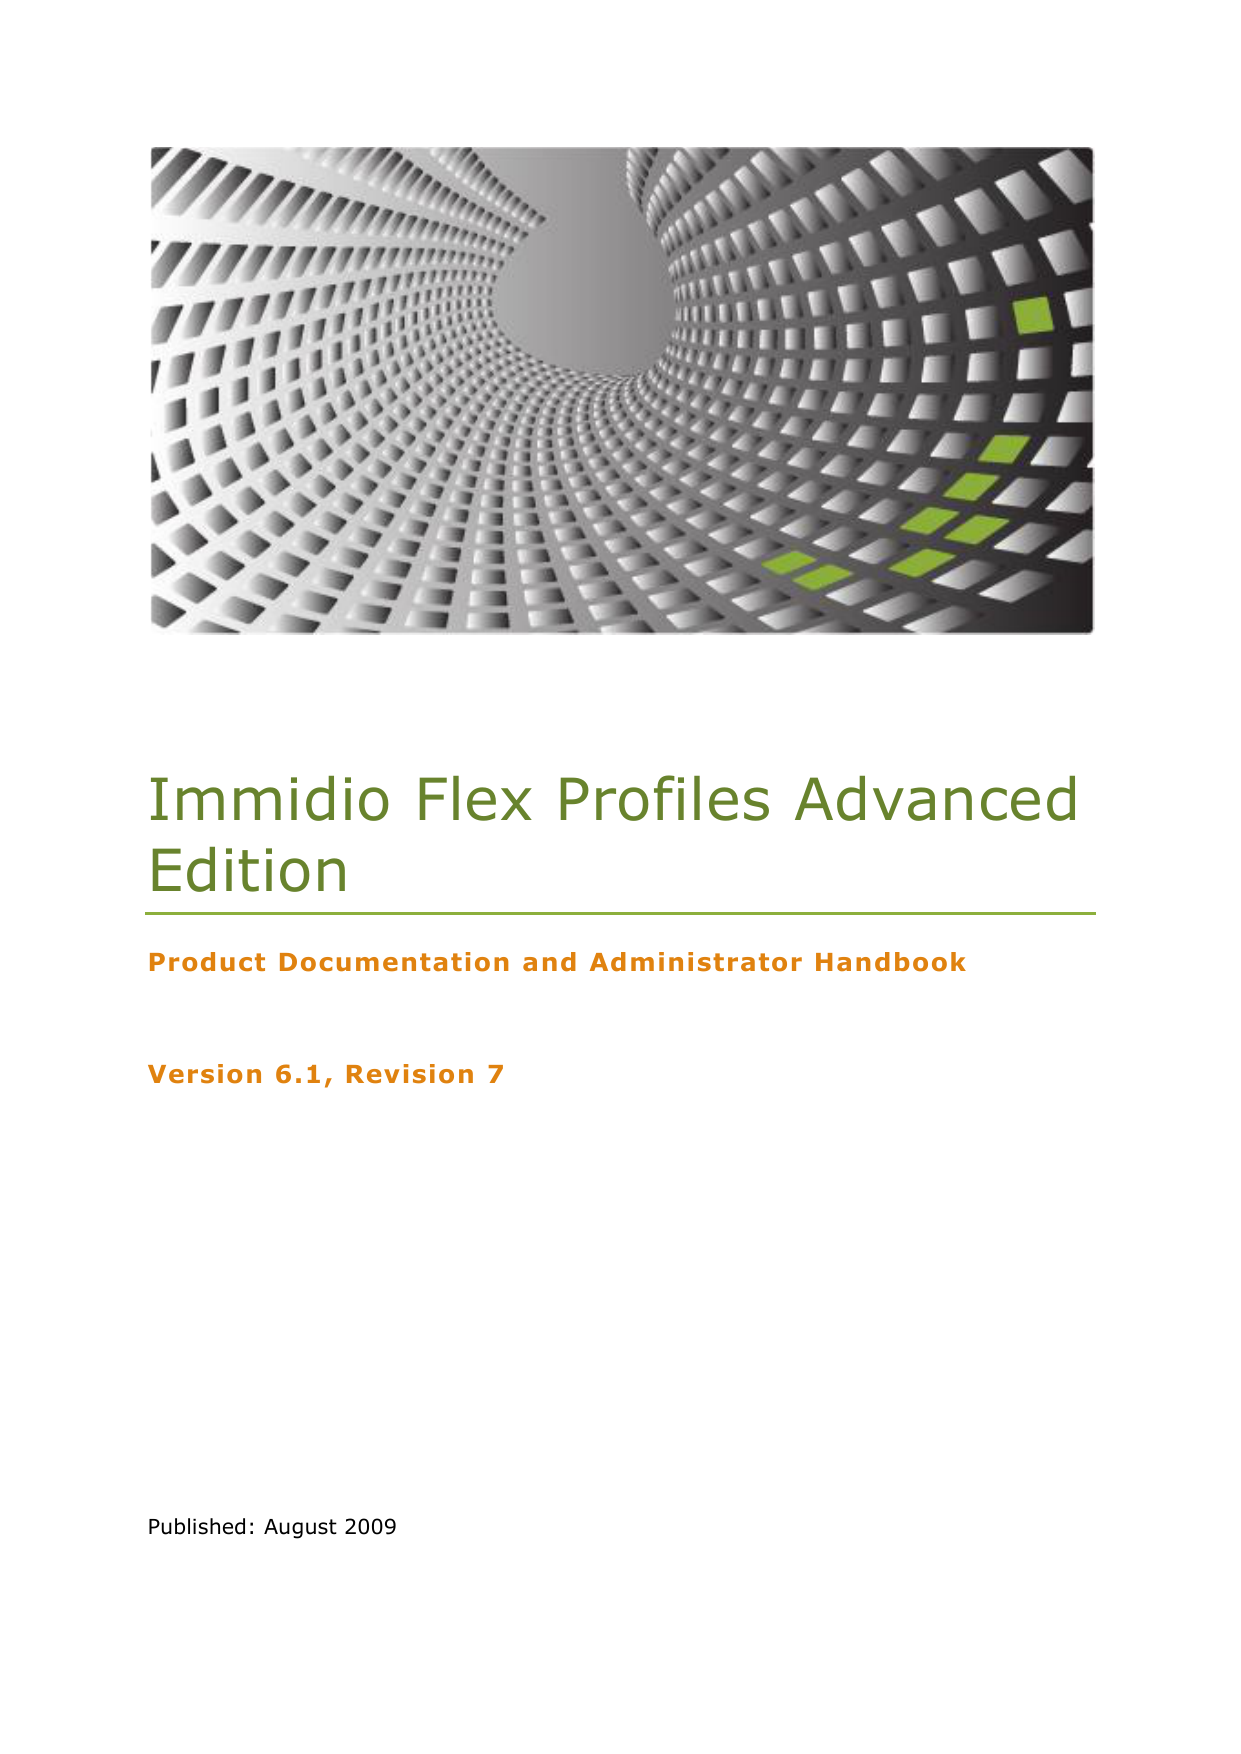 immidio flex profiles express edition